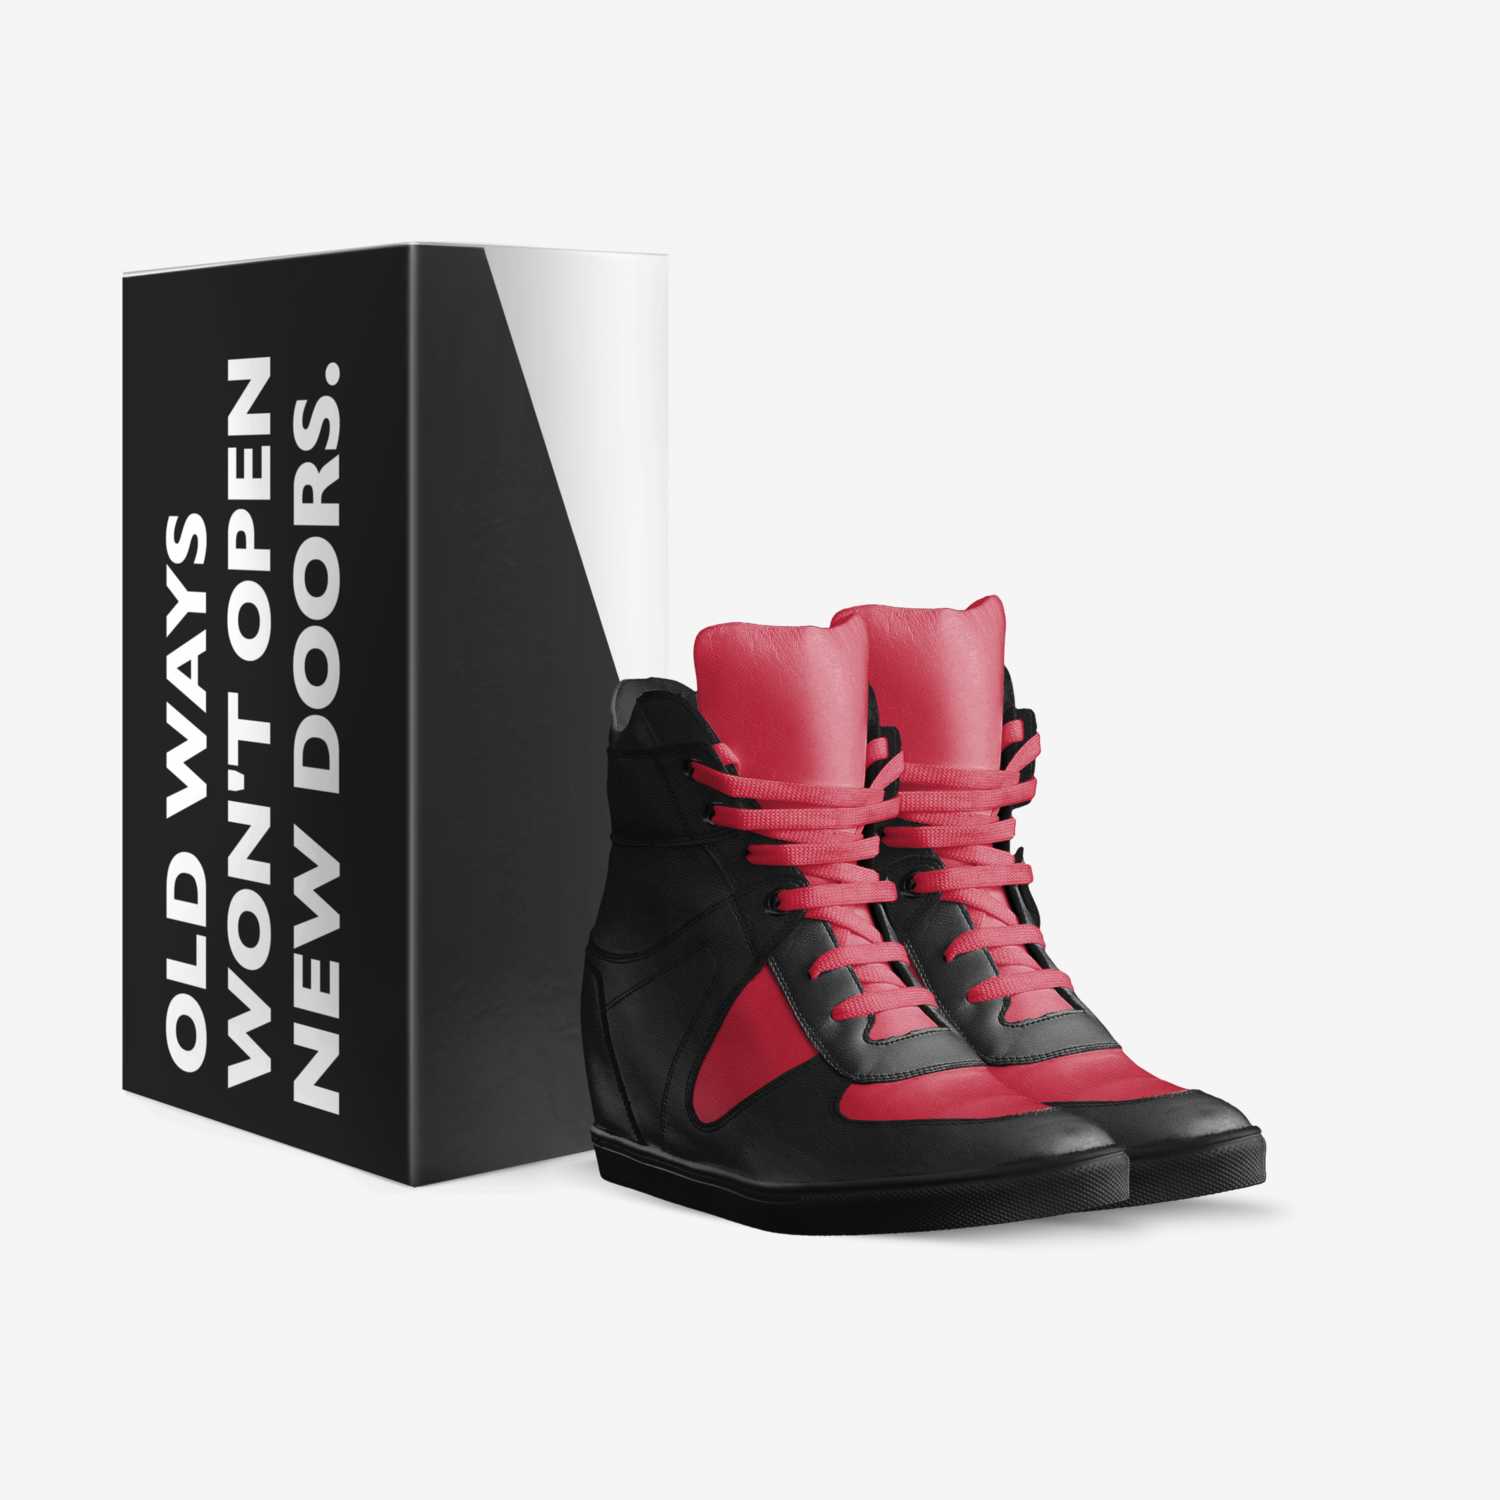 New Road ® youth custom made in Italy shoes by Paulina Jastrzebska | Box view